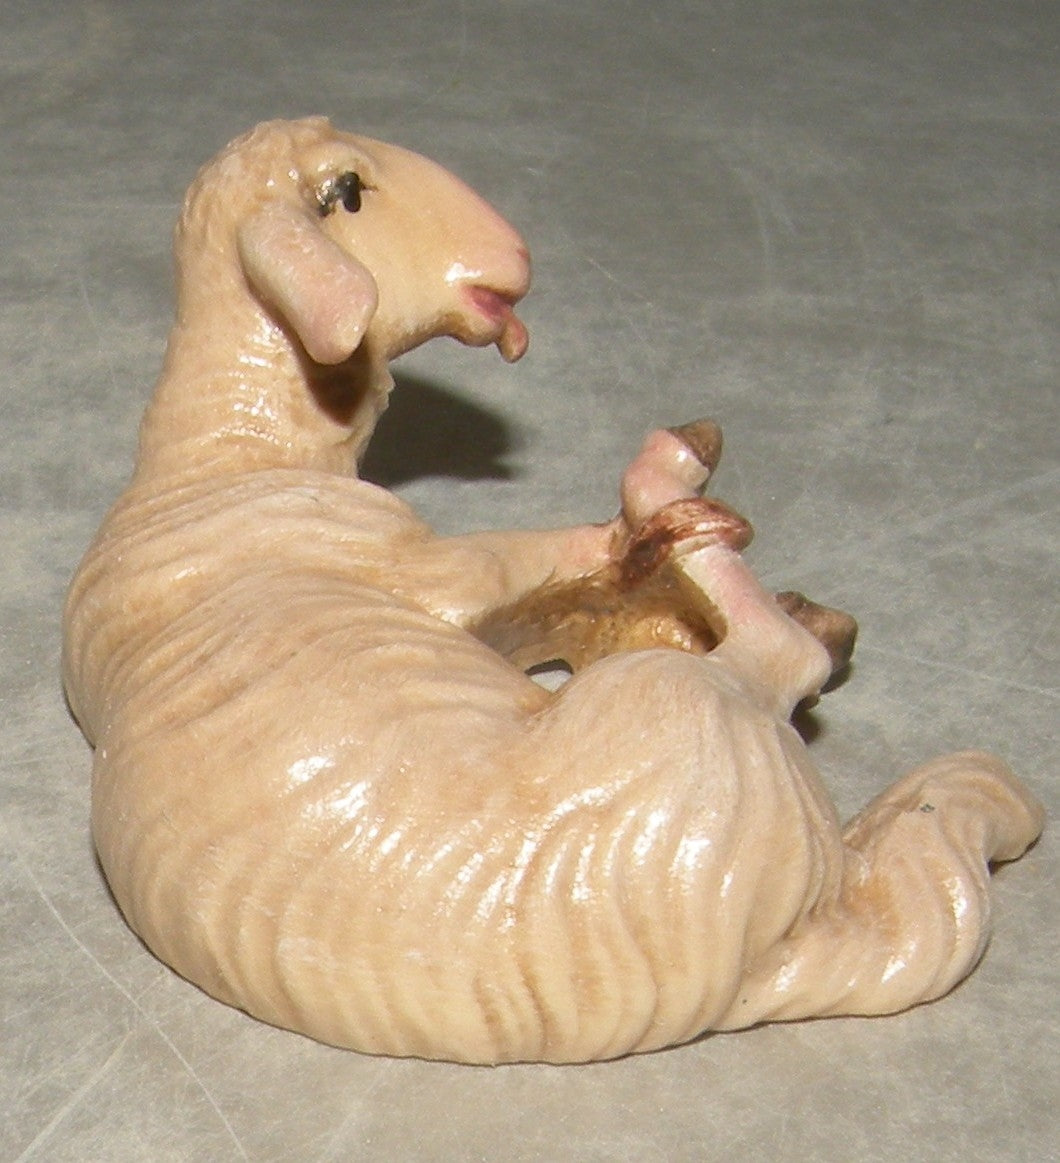 Sheep lying-down - Oriental nativity dressed- 21211